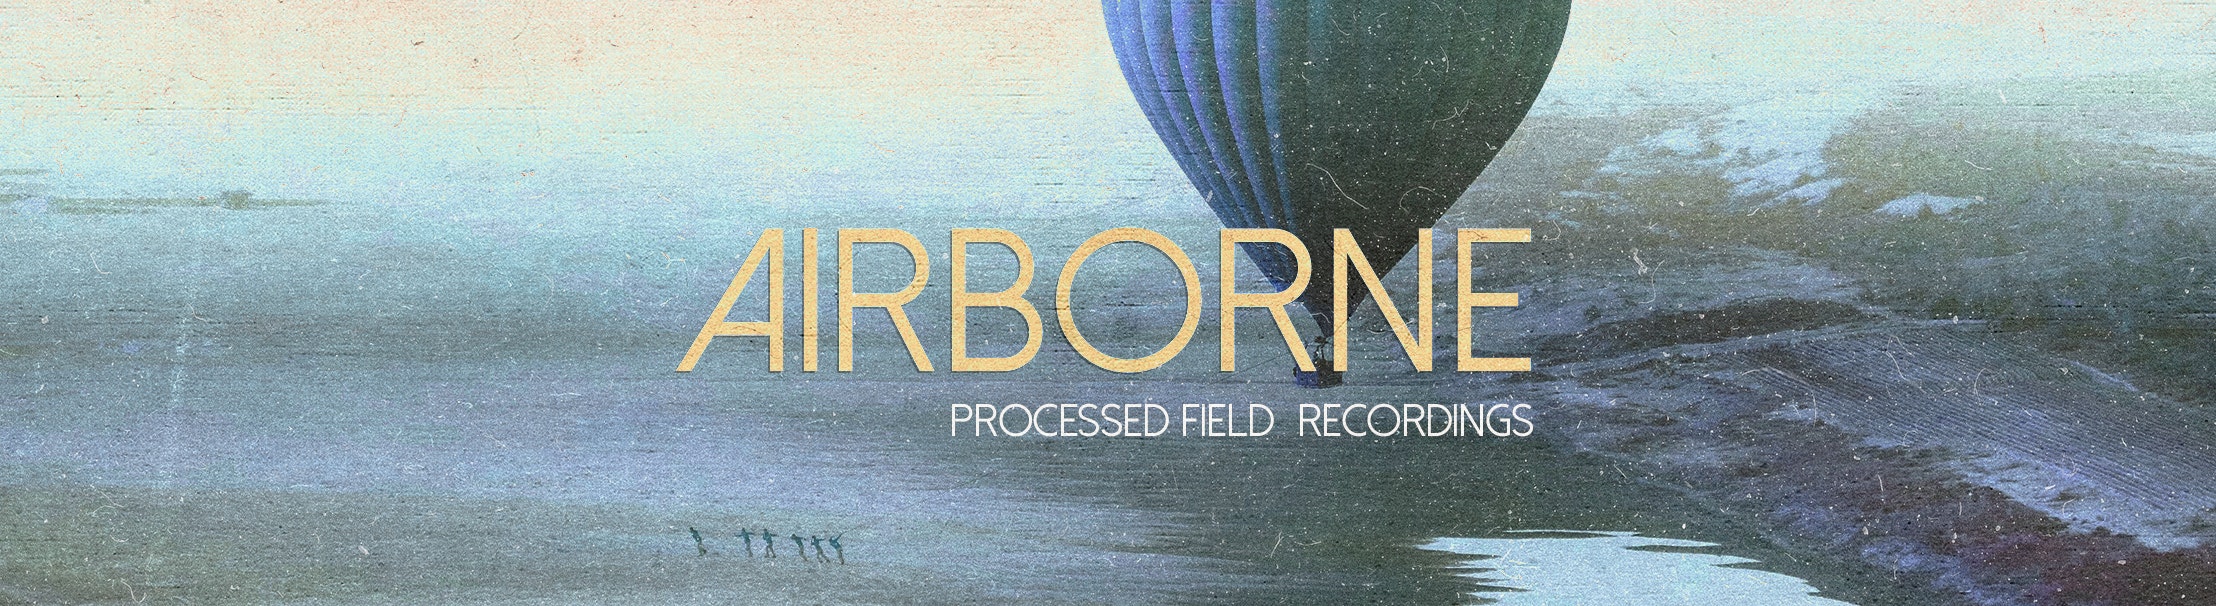 Airborne Processed Field Recordings